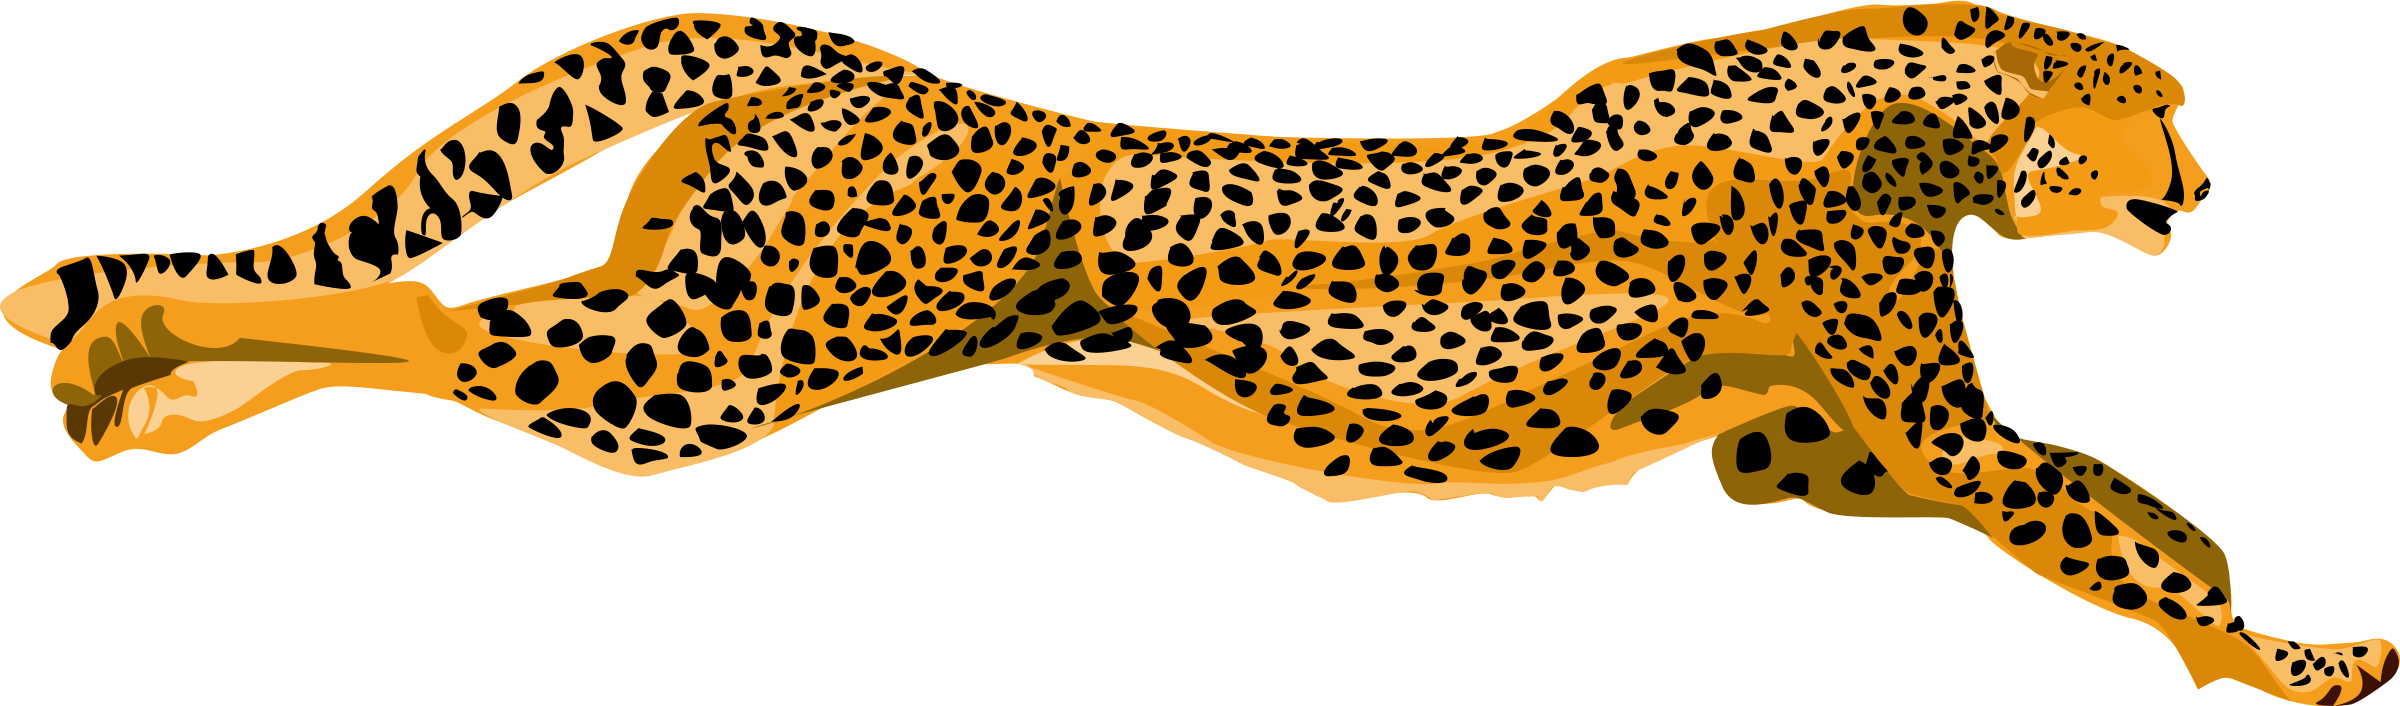 Leopard-cheetah - Leopard Print Flip Flops (2400x706)